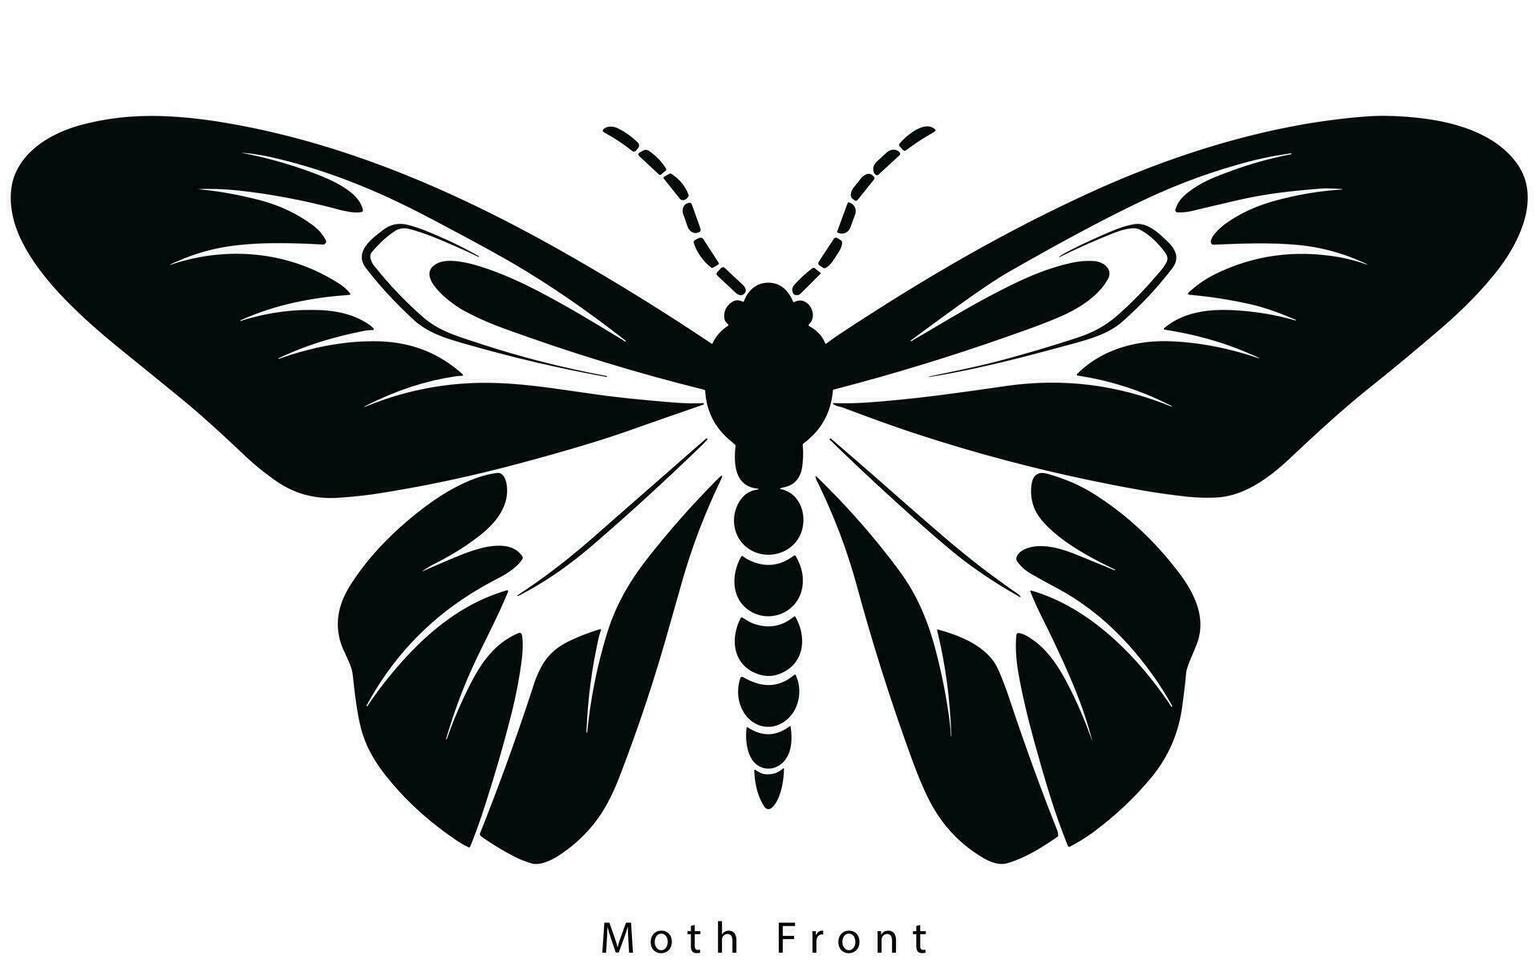 monarca borboleta silhueta. vetor ilustração